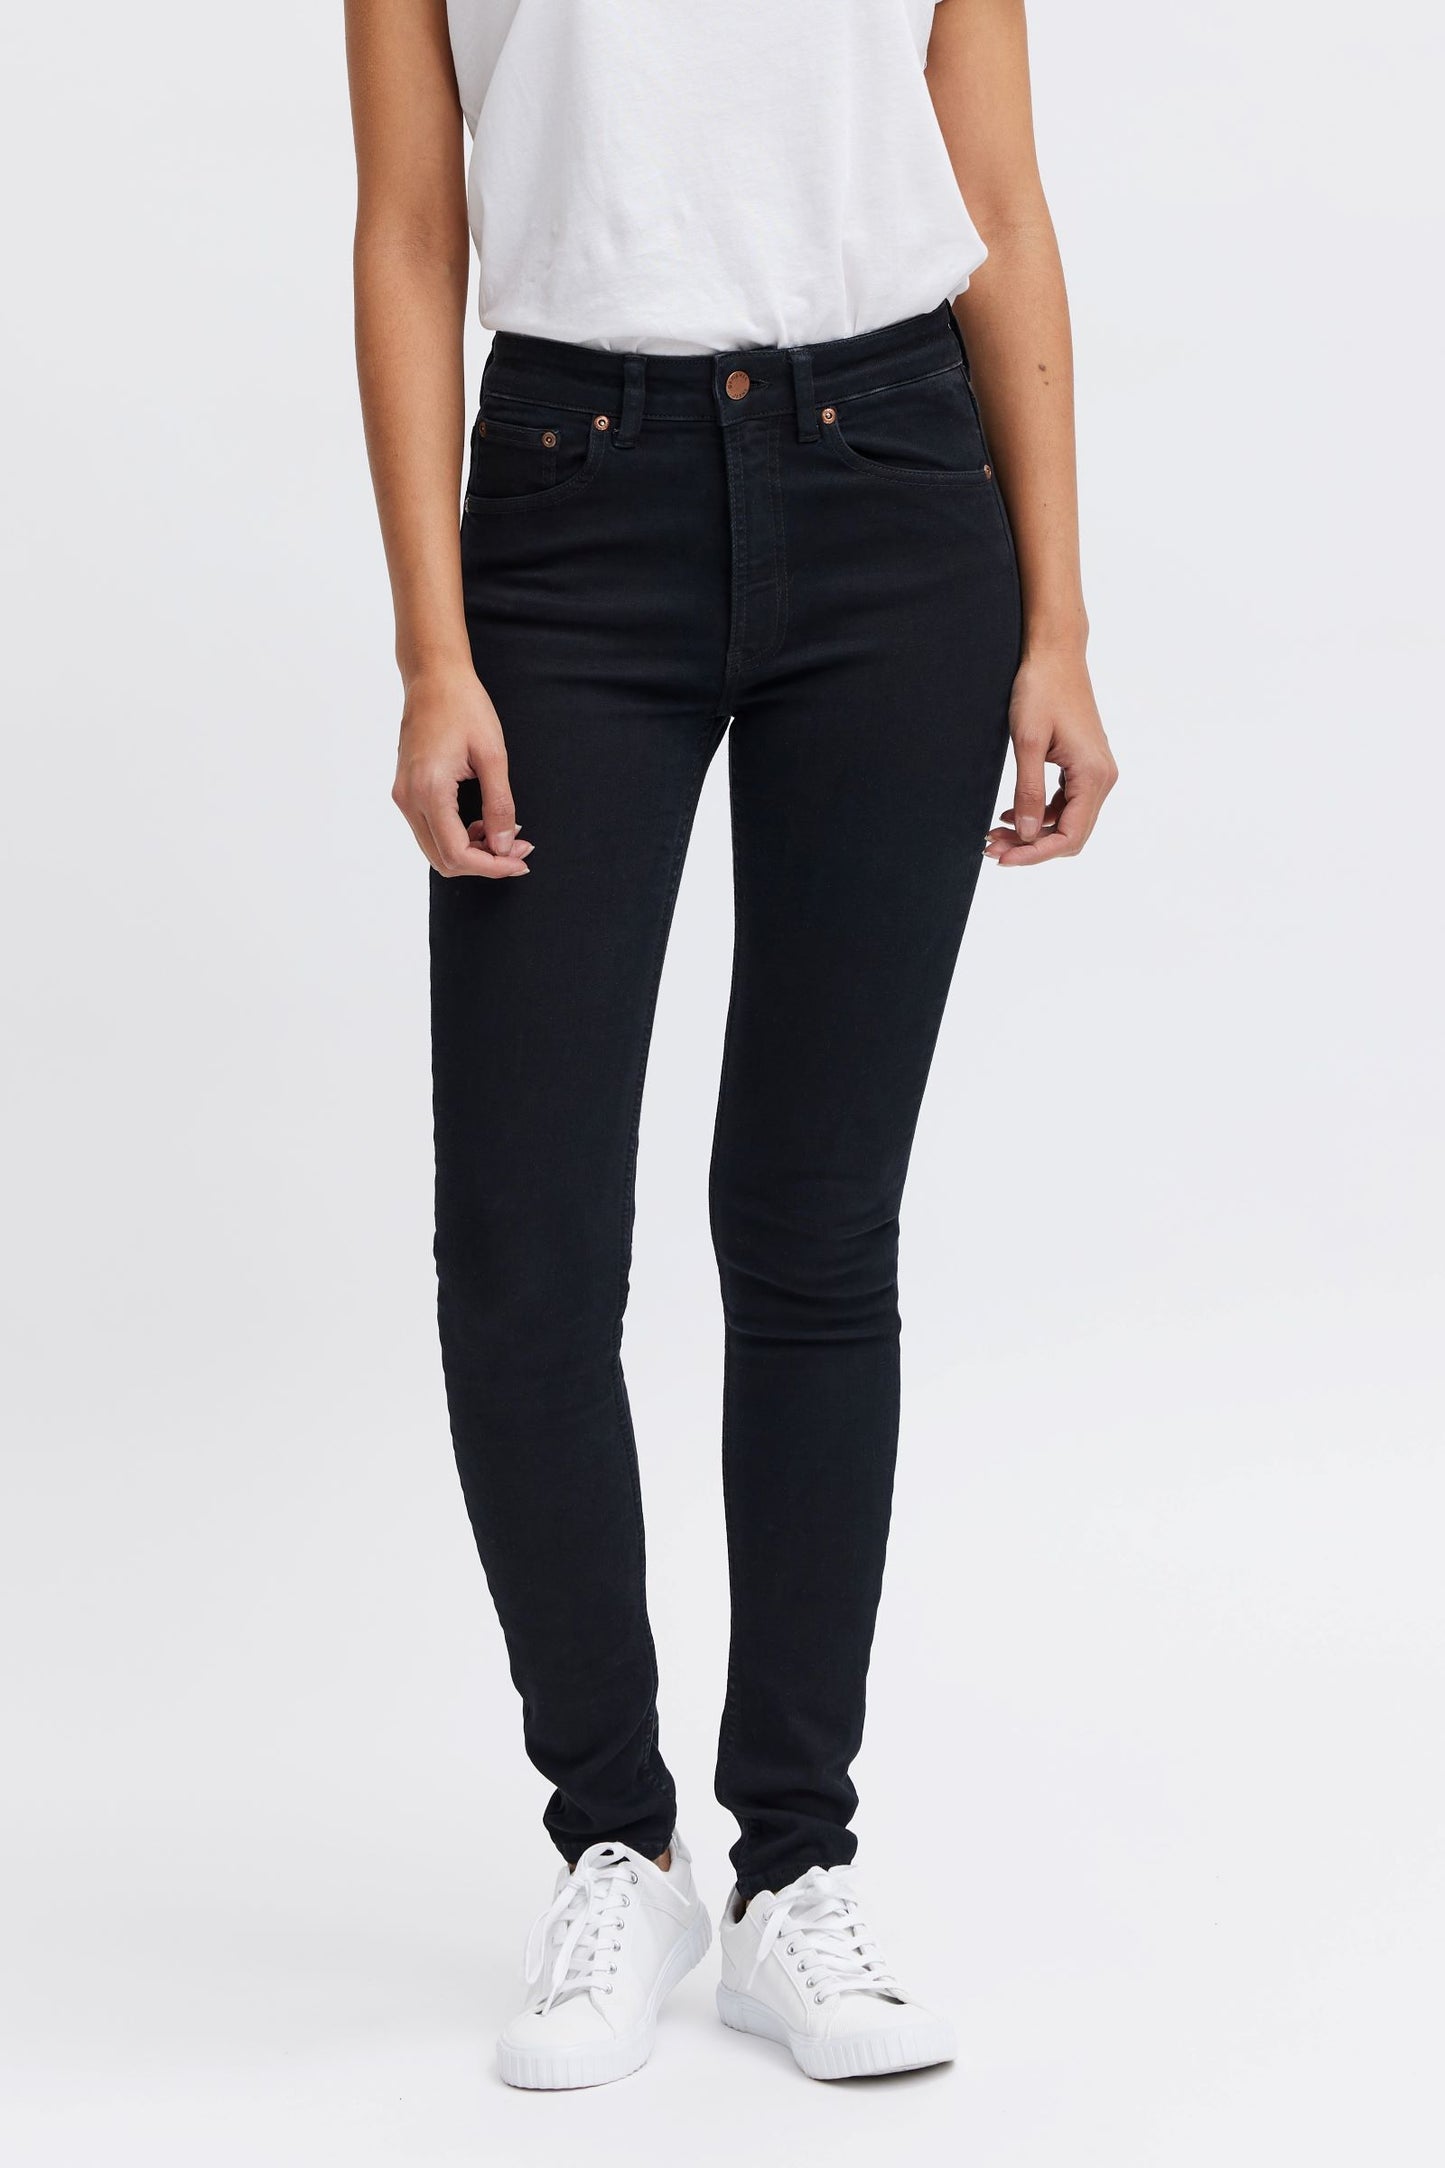 Black organic jeans for women